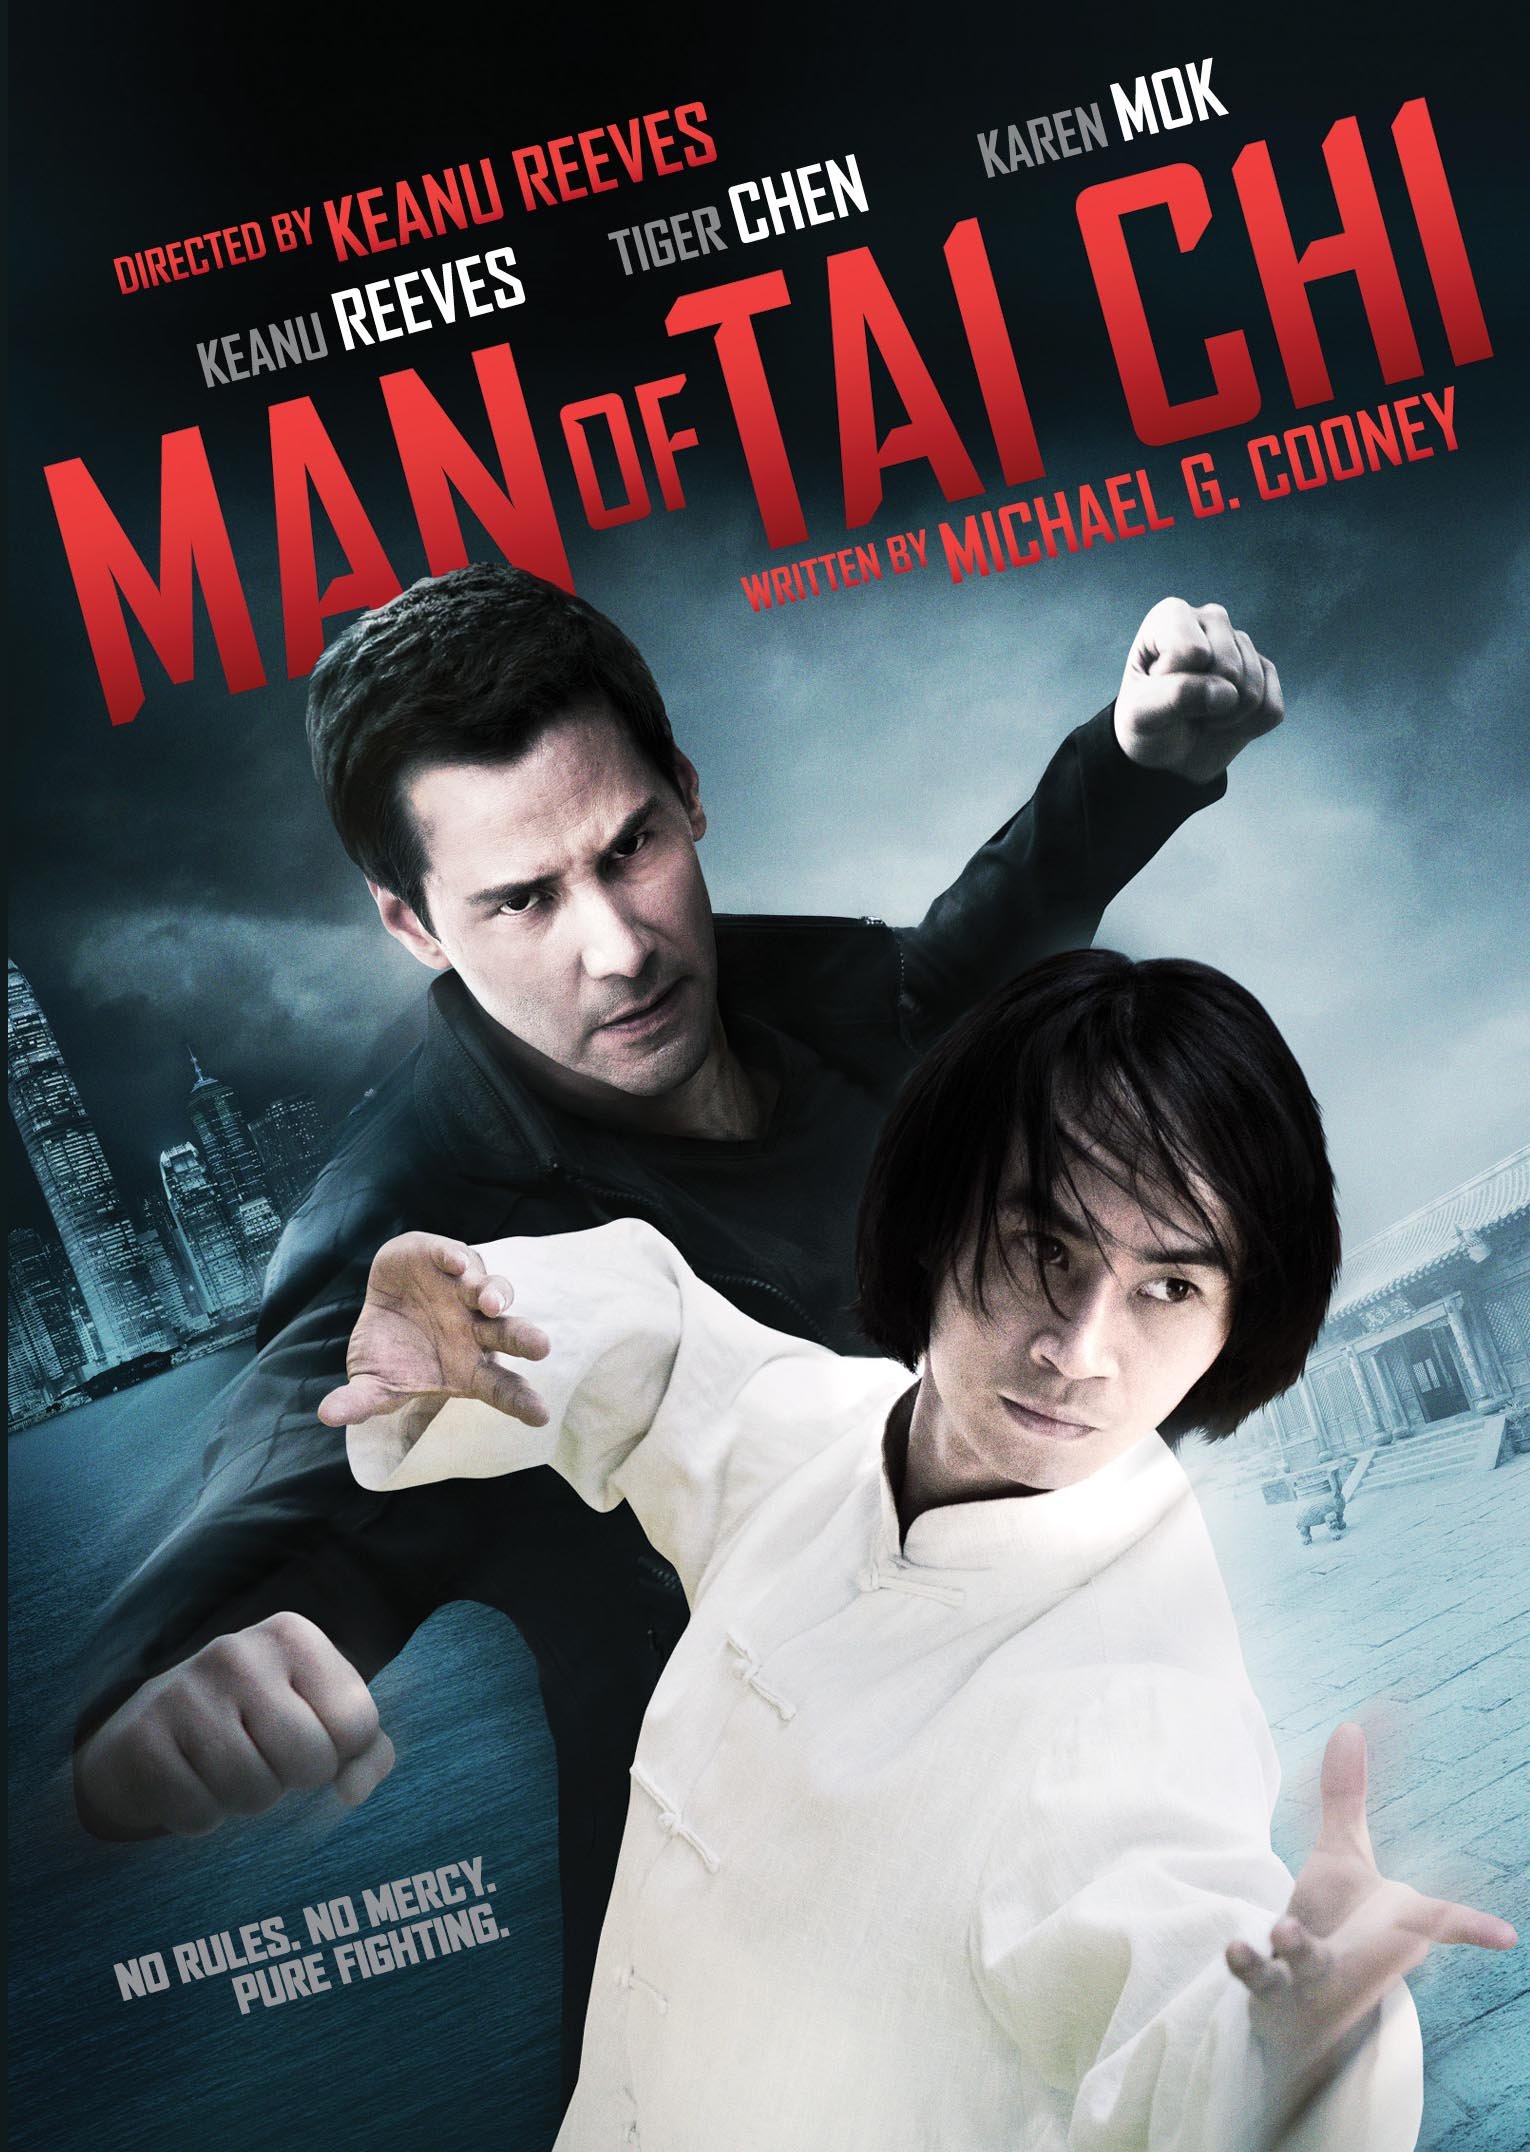 Man of Tai Chi DVD Release Date December 10, 2013